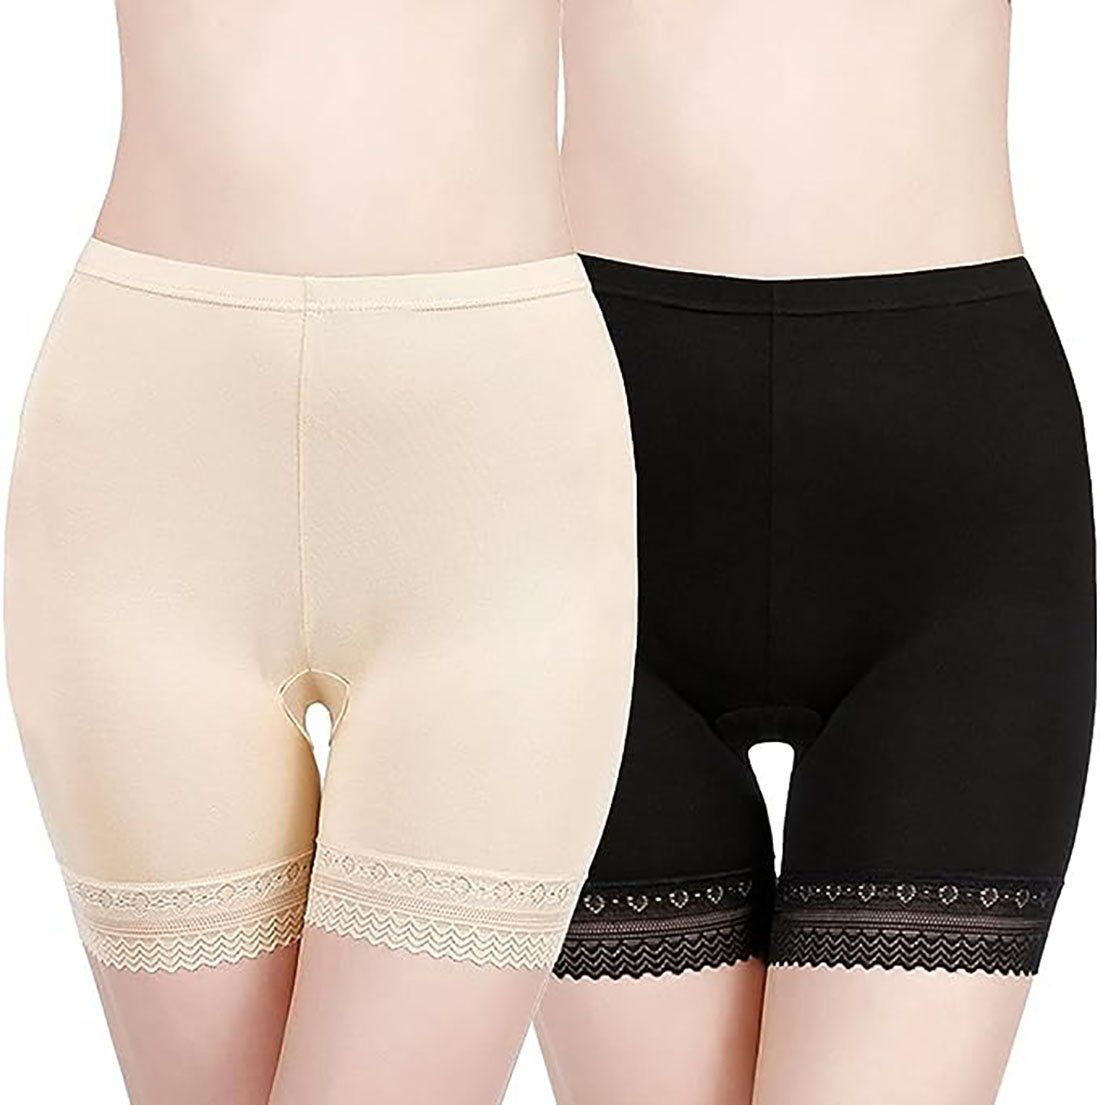 CTGtree Yogashorts 2 Stück Damen Unterhosen Baumwolle Mädchen Panties Slipshorts